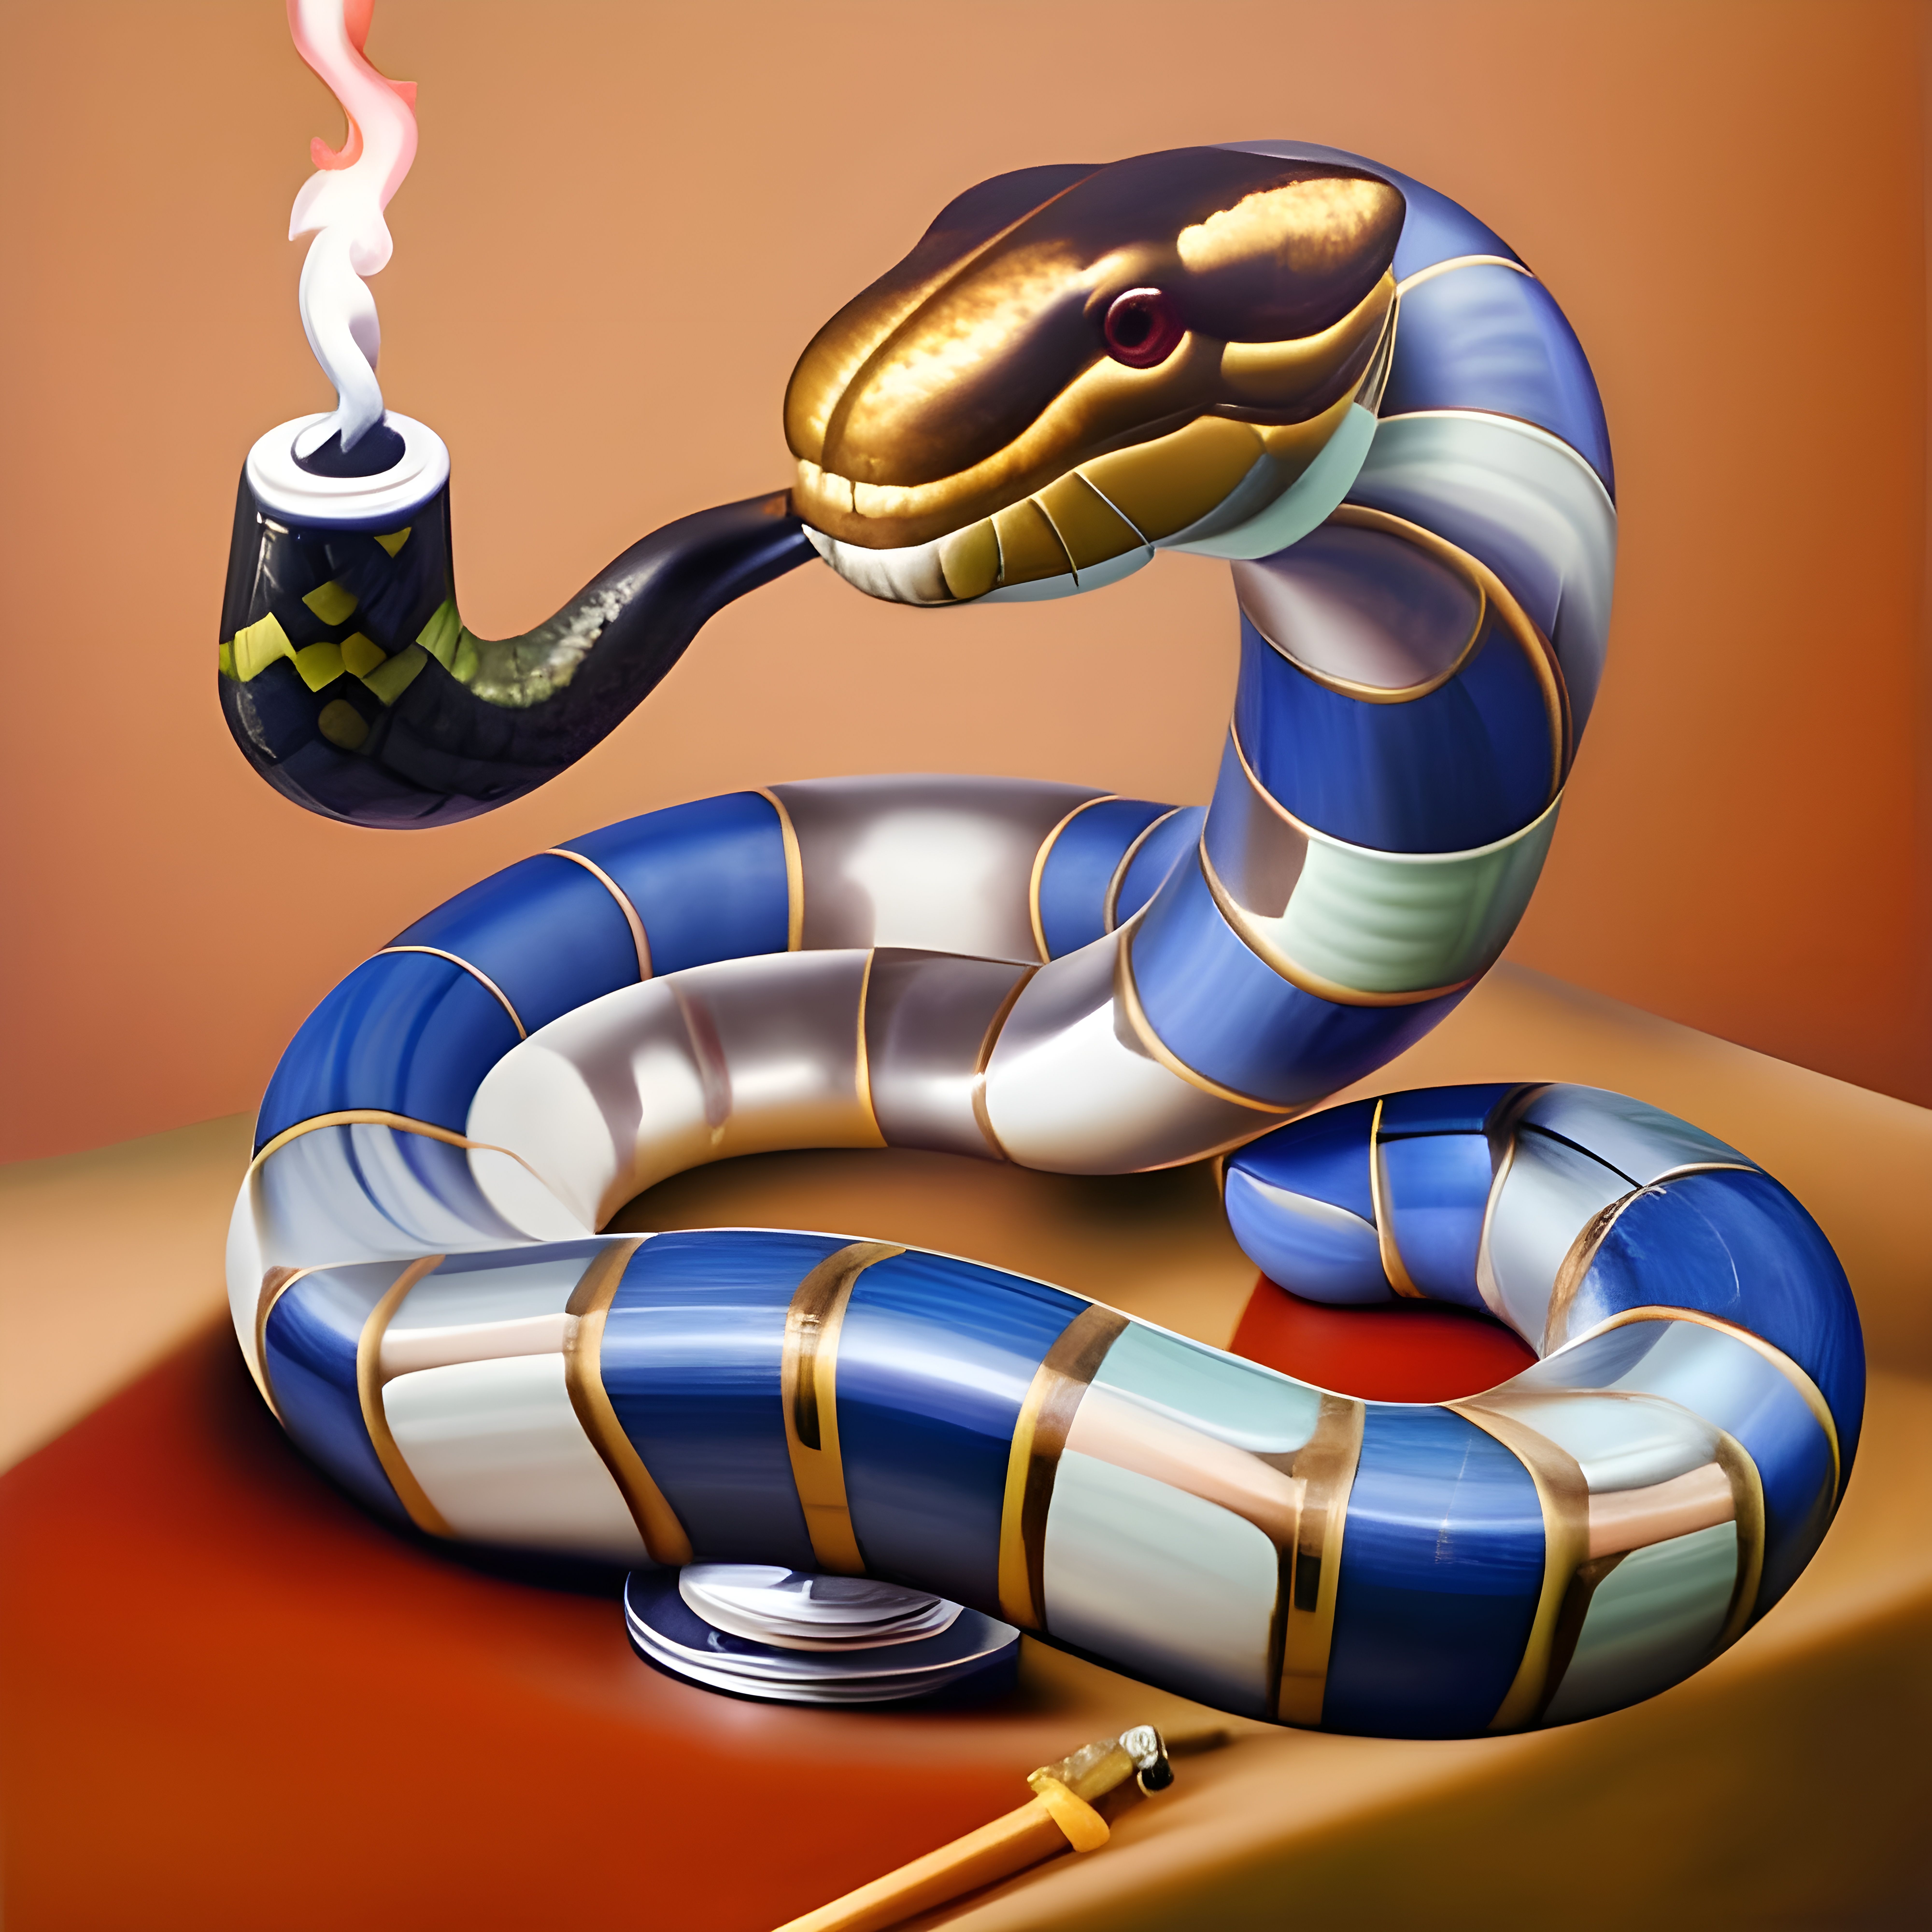 Smoking Snakes, Sabaton Wiki